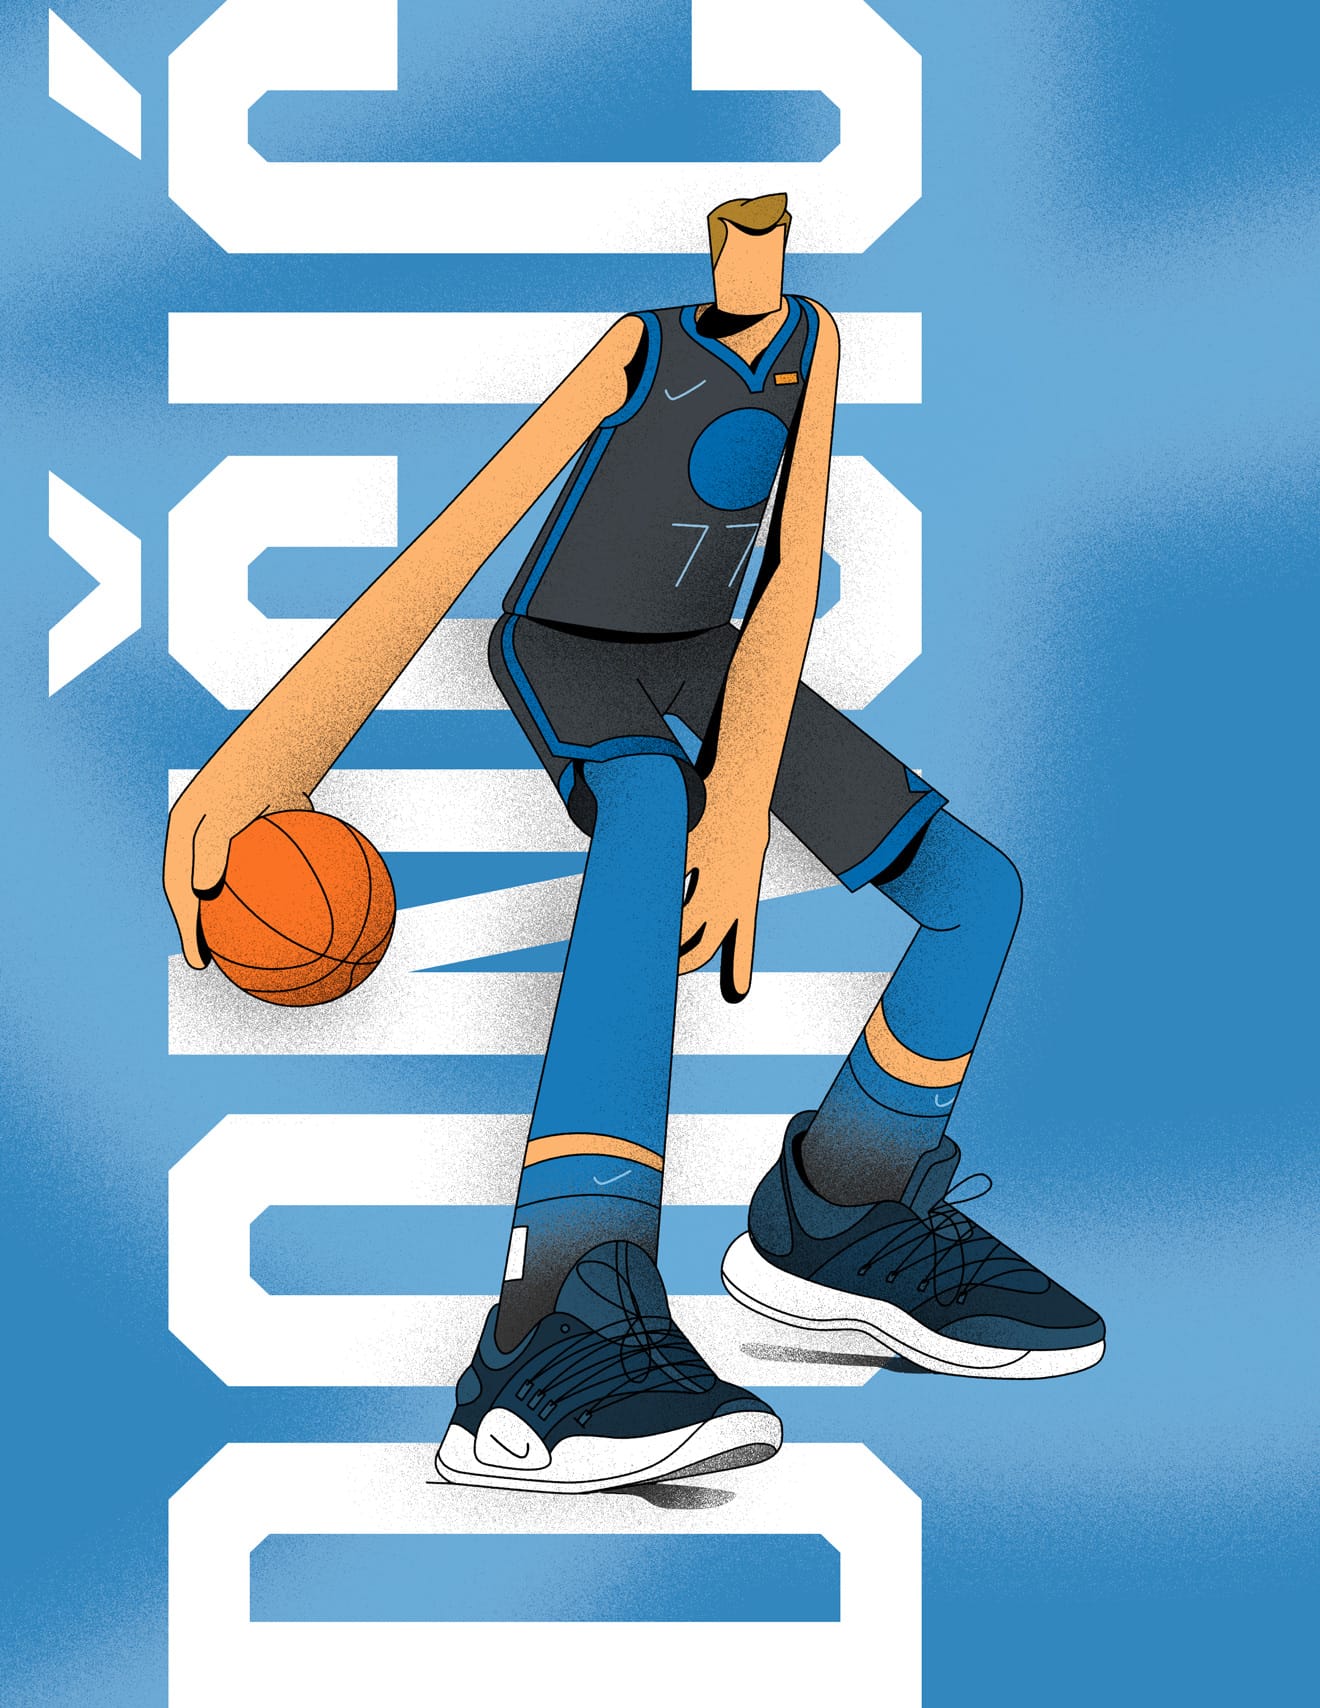 Illustration of basketball player, Luka Doncic, dribbling